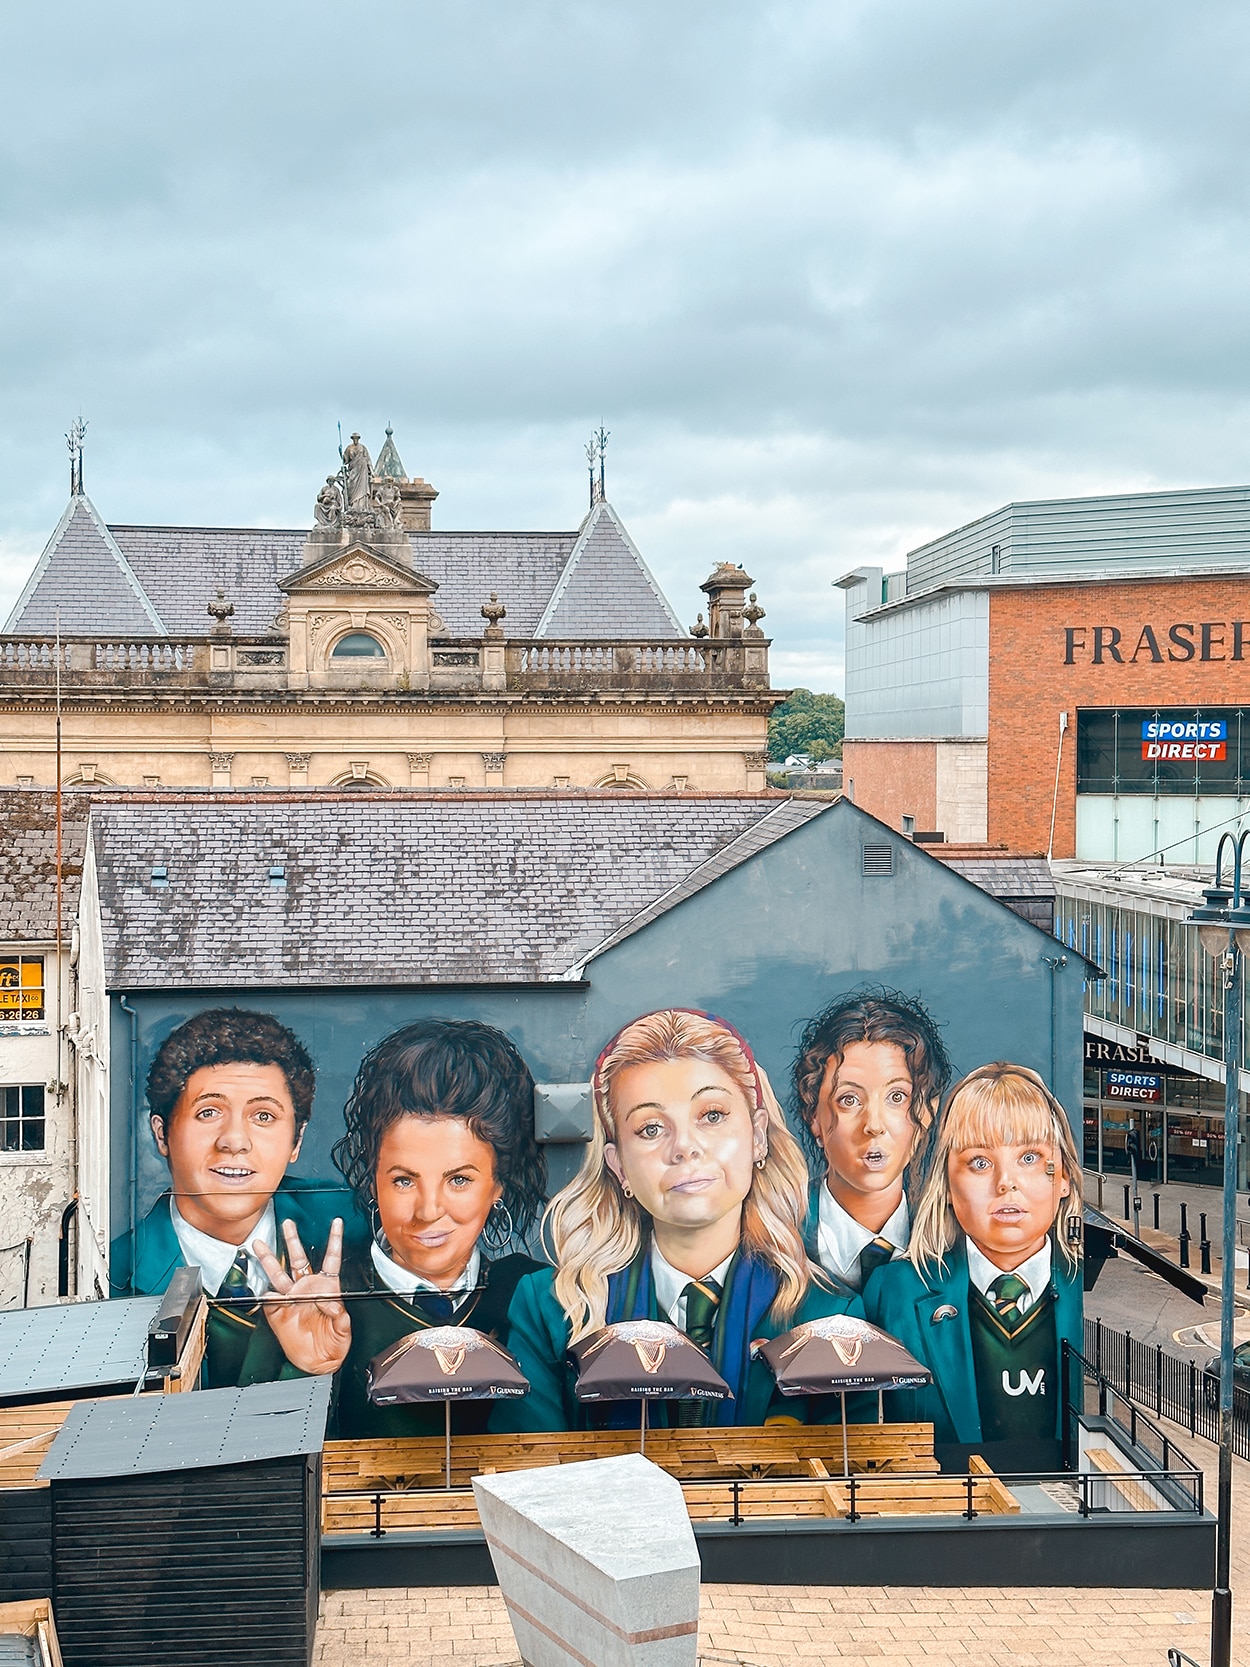 Derry Girls Mural in Londonderry/Derry Northern Ireland- photo by Keryn Means editor of TwistTravelMag.com